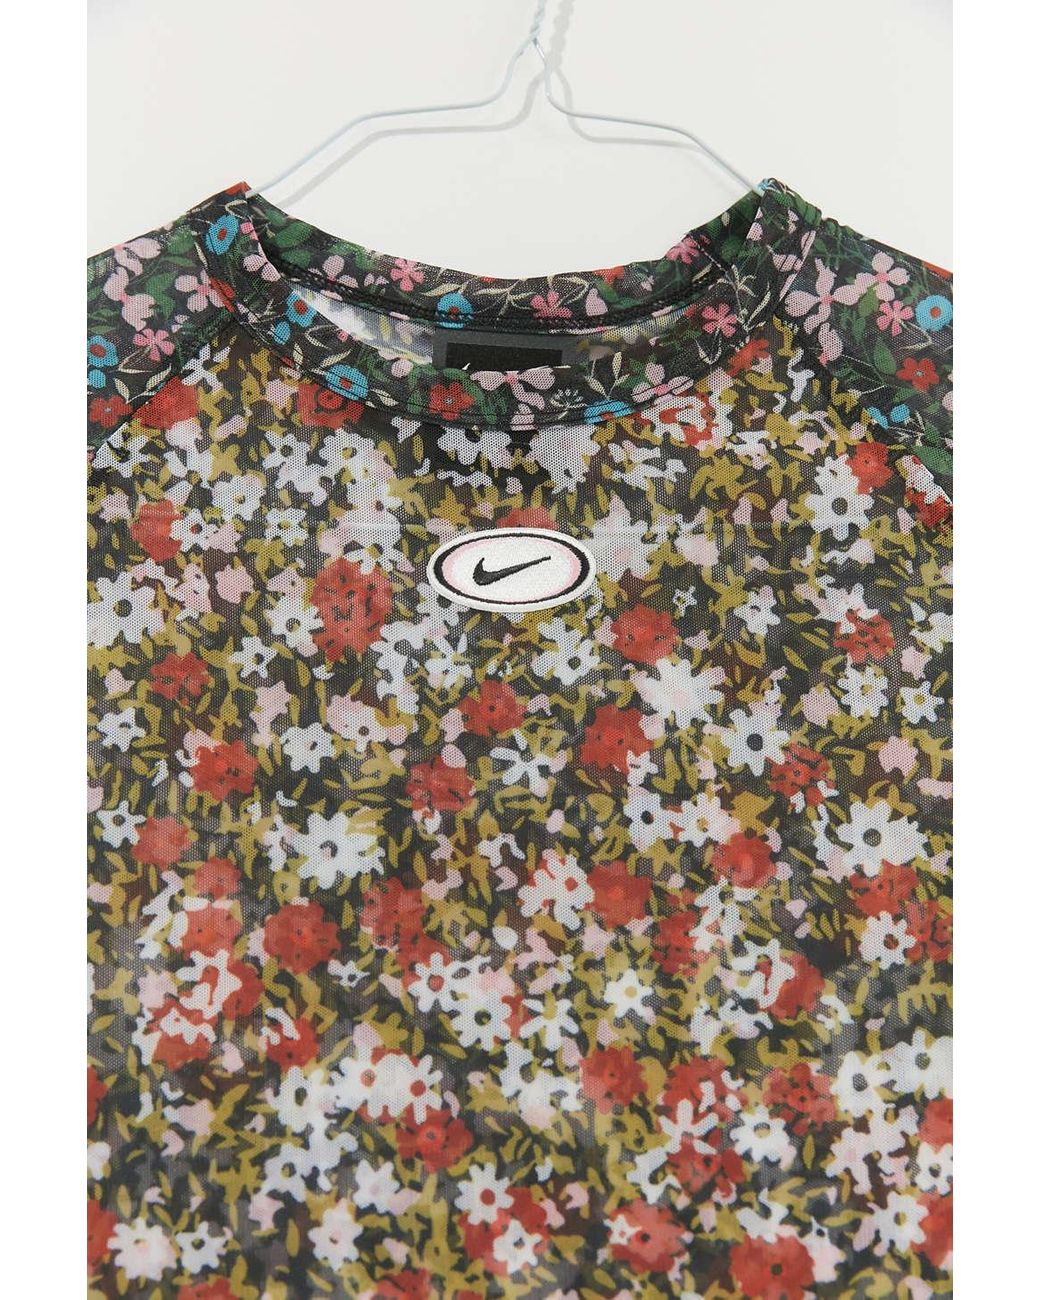 Nike Sportswear Floral Mesh Top | Lyst